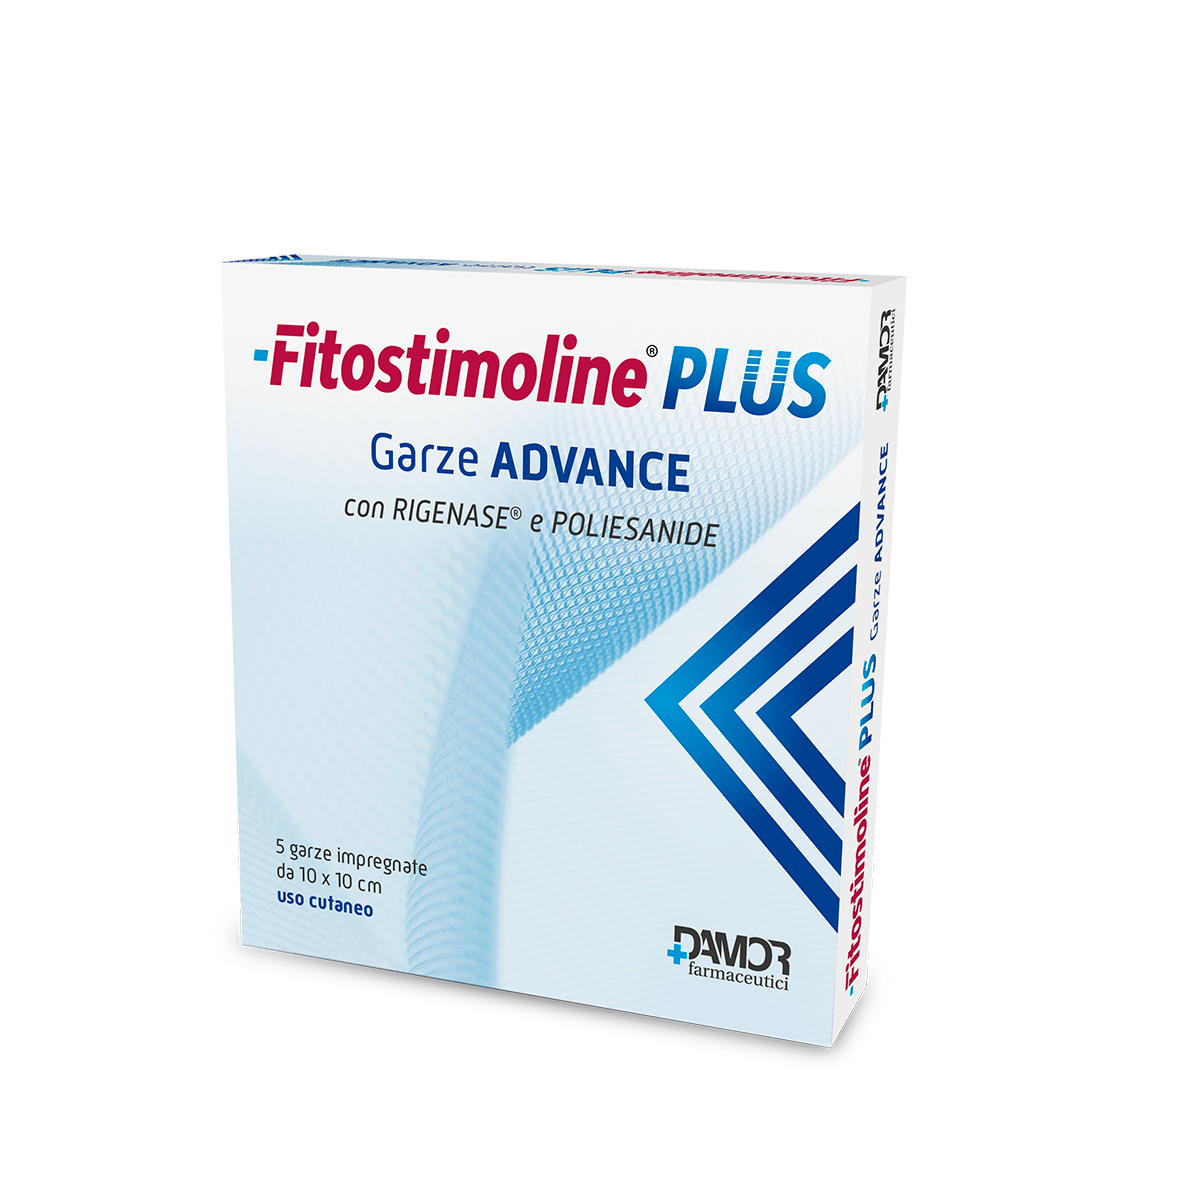 Fitostimoline Plus Garze Advance